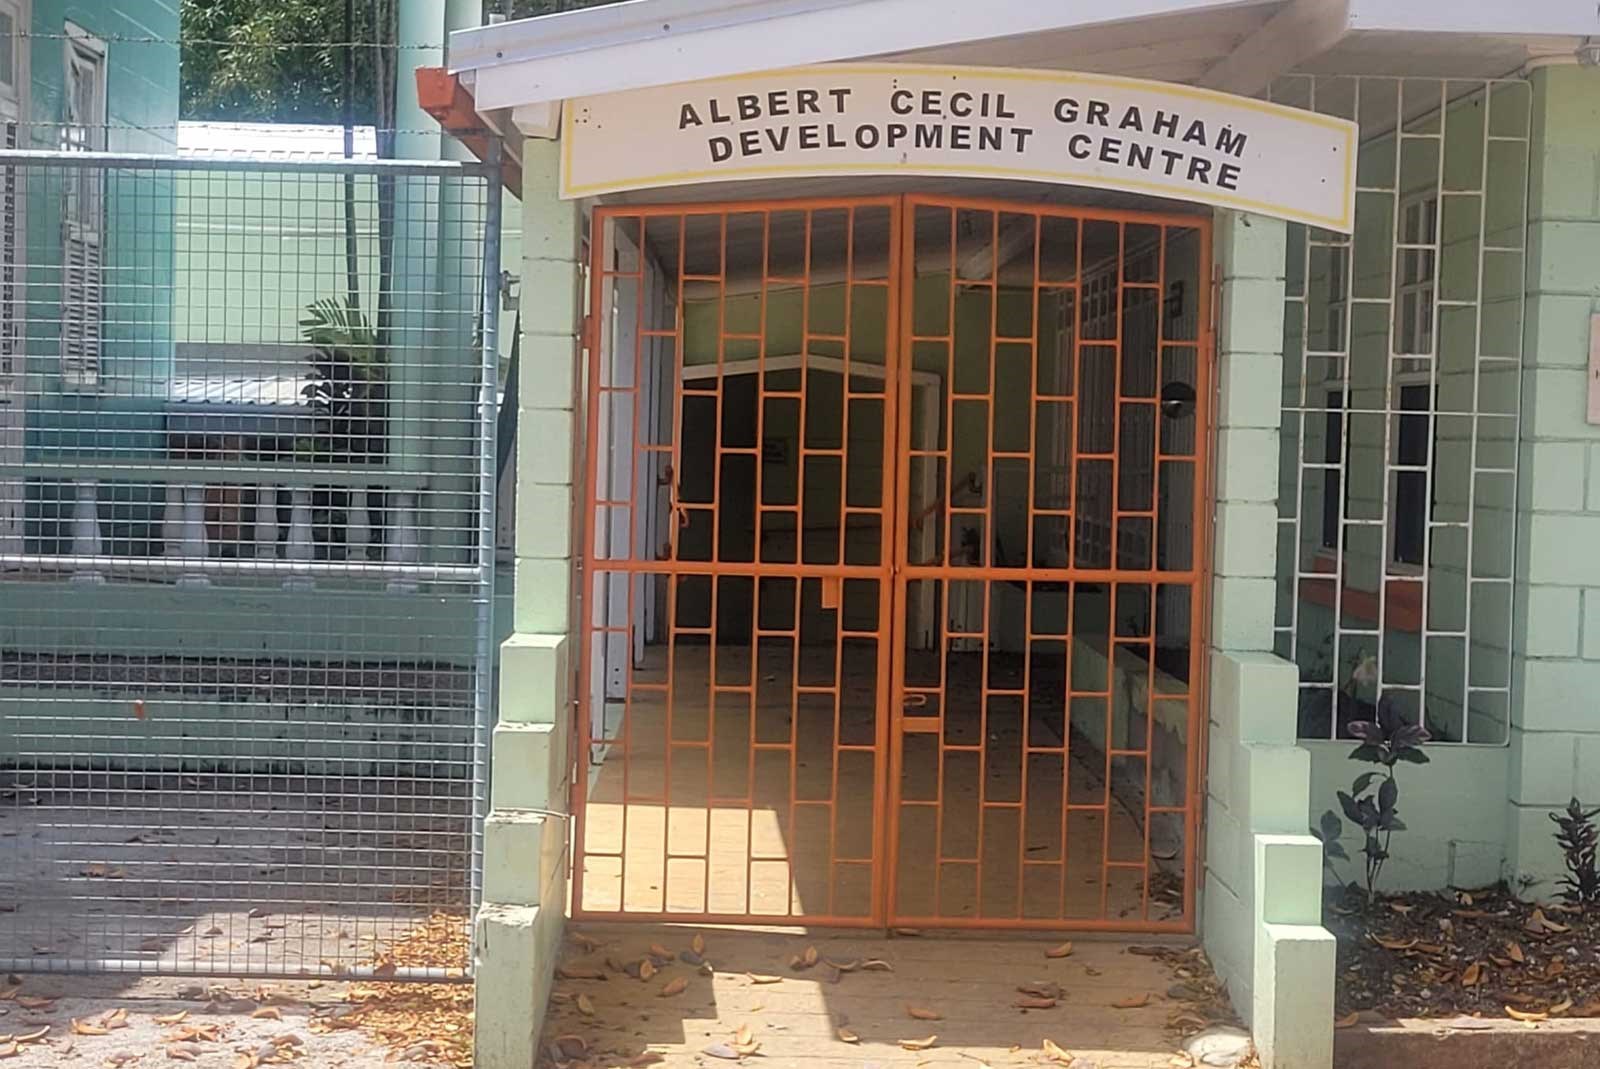 Albert Cecil Graham Development Centre